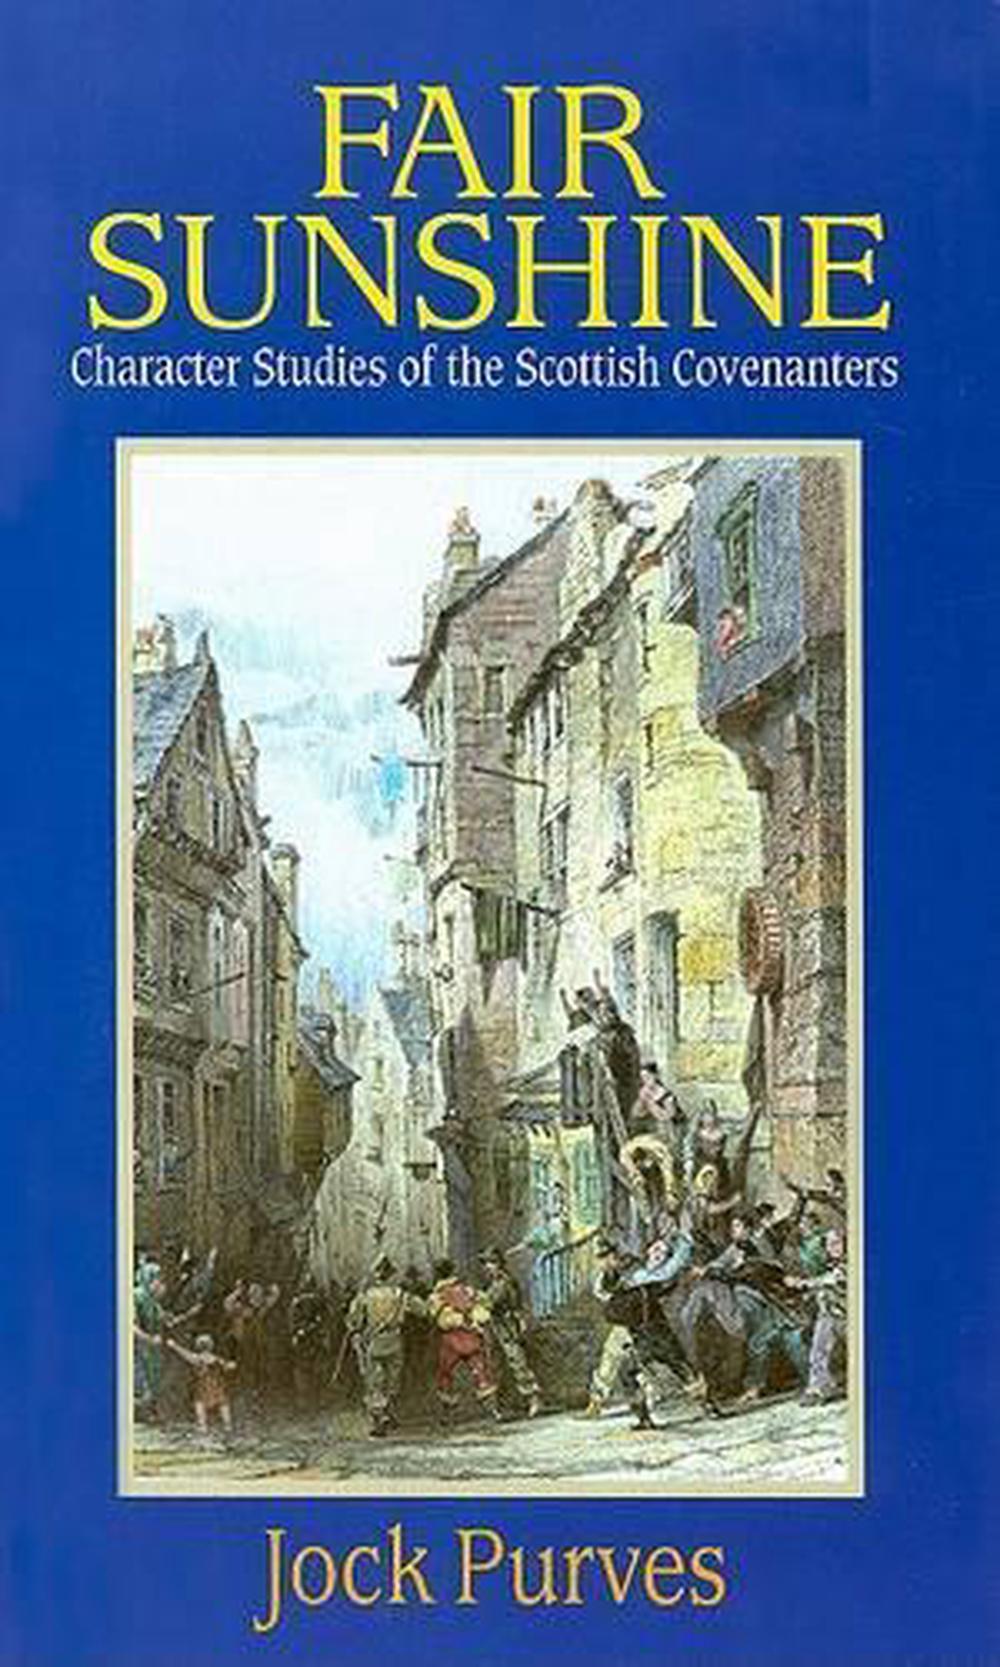 Fair Sunshine Character Studies of the Scottish Covenanters by Jock